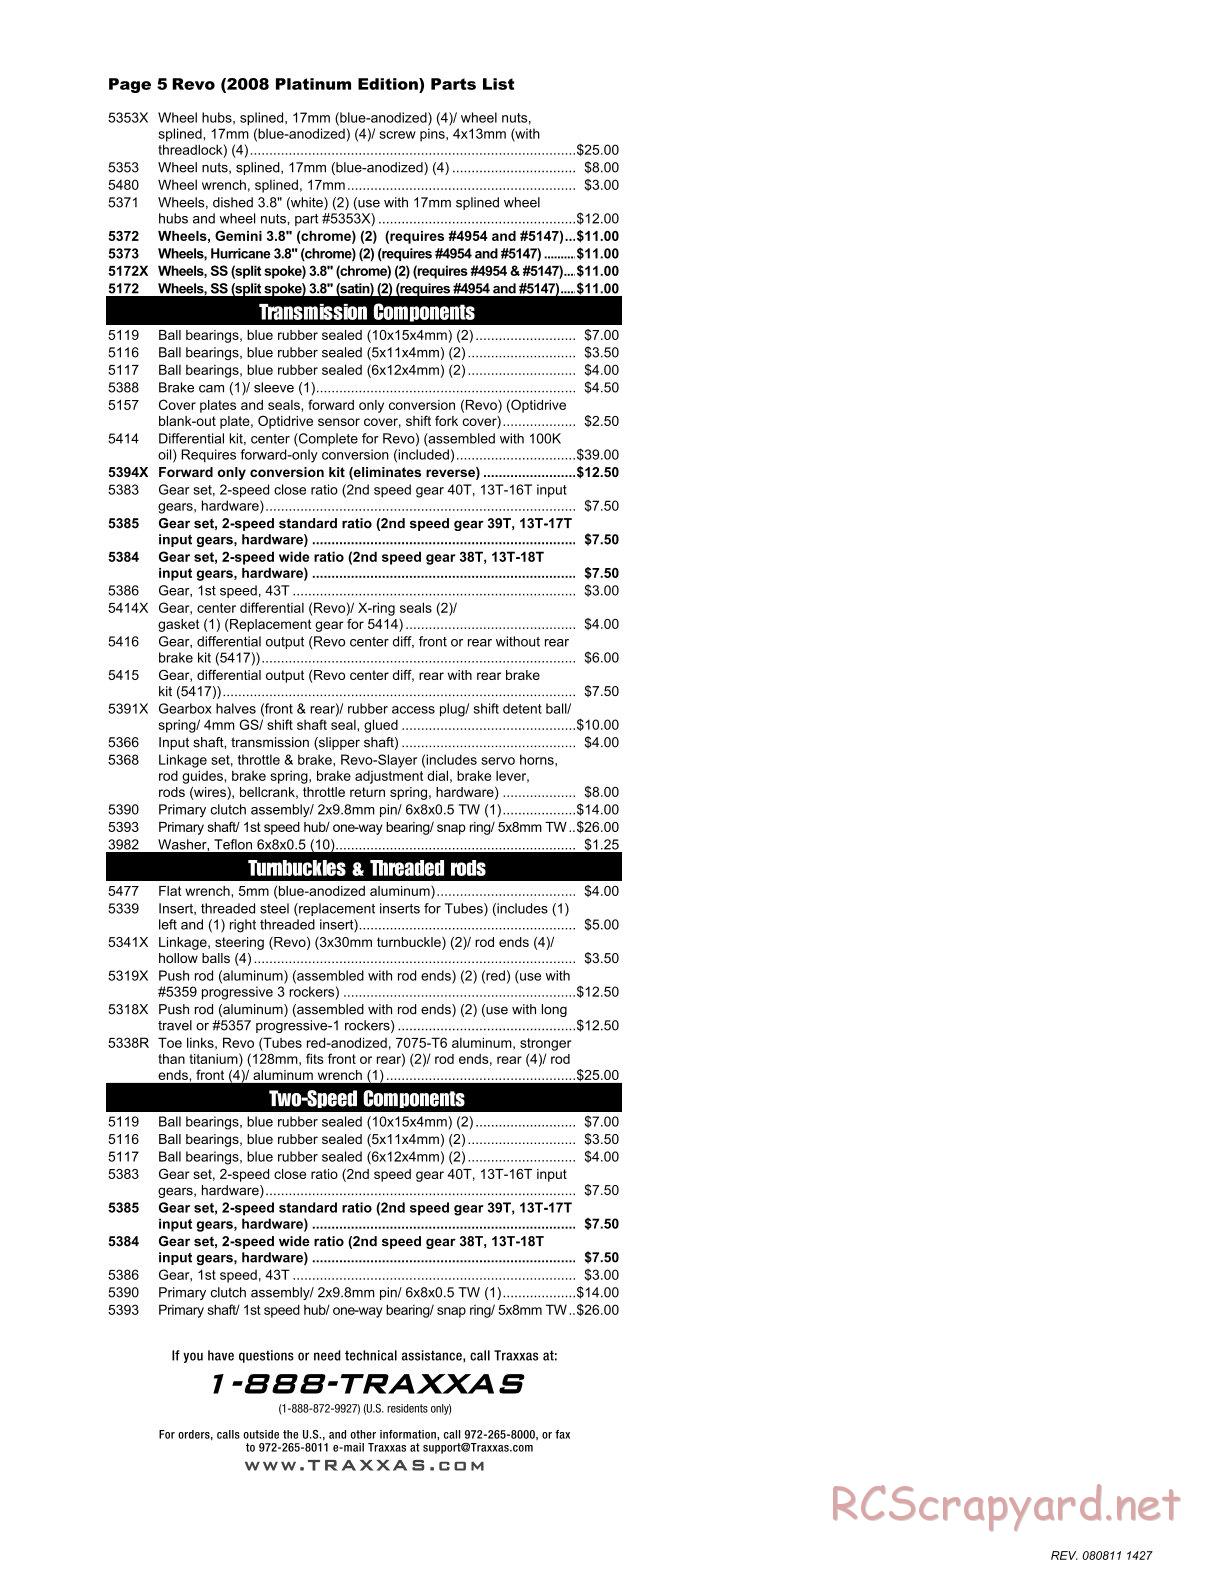 Traxxas - Revo 3.3 (2008) - Parts List - Page 5